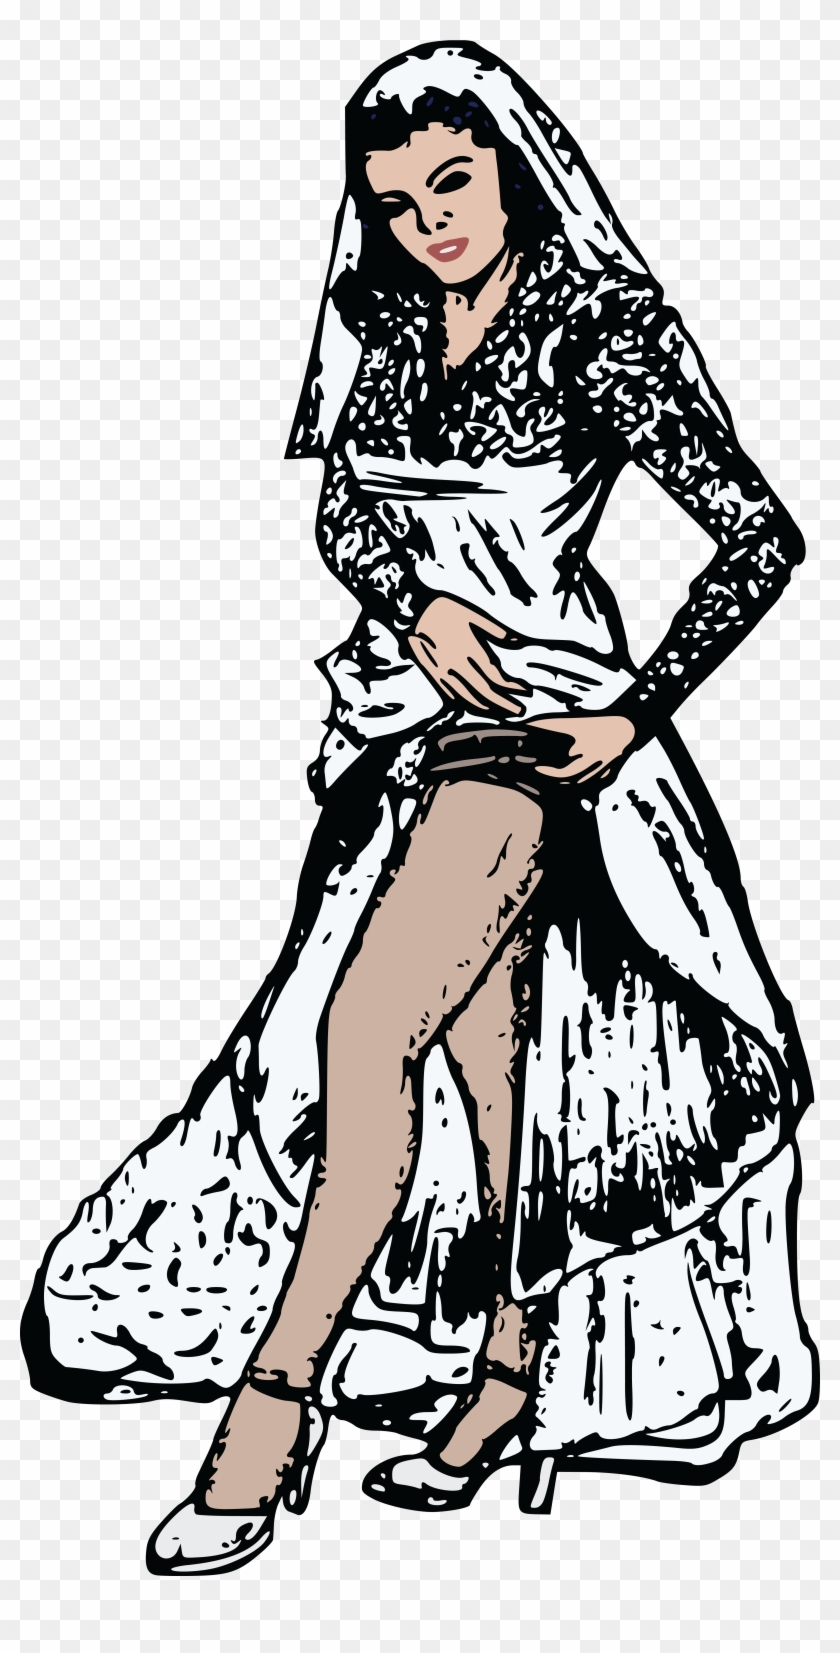 Free Clipart Of A Retro Bride Showing Her Garter Belt - Garter #839617